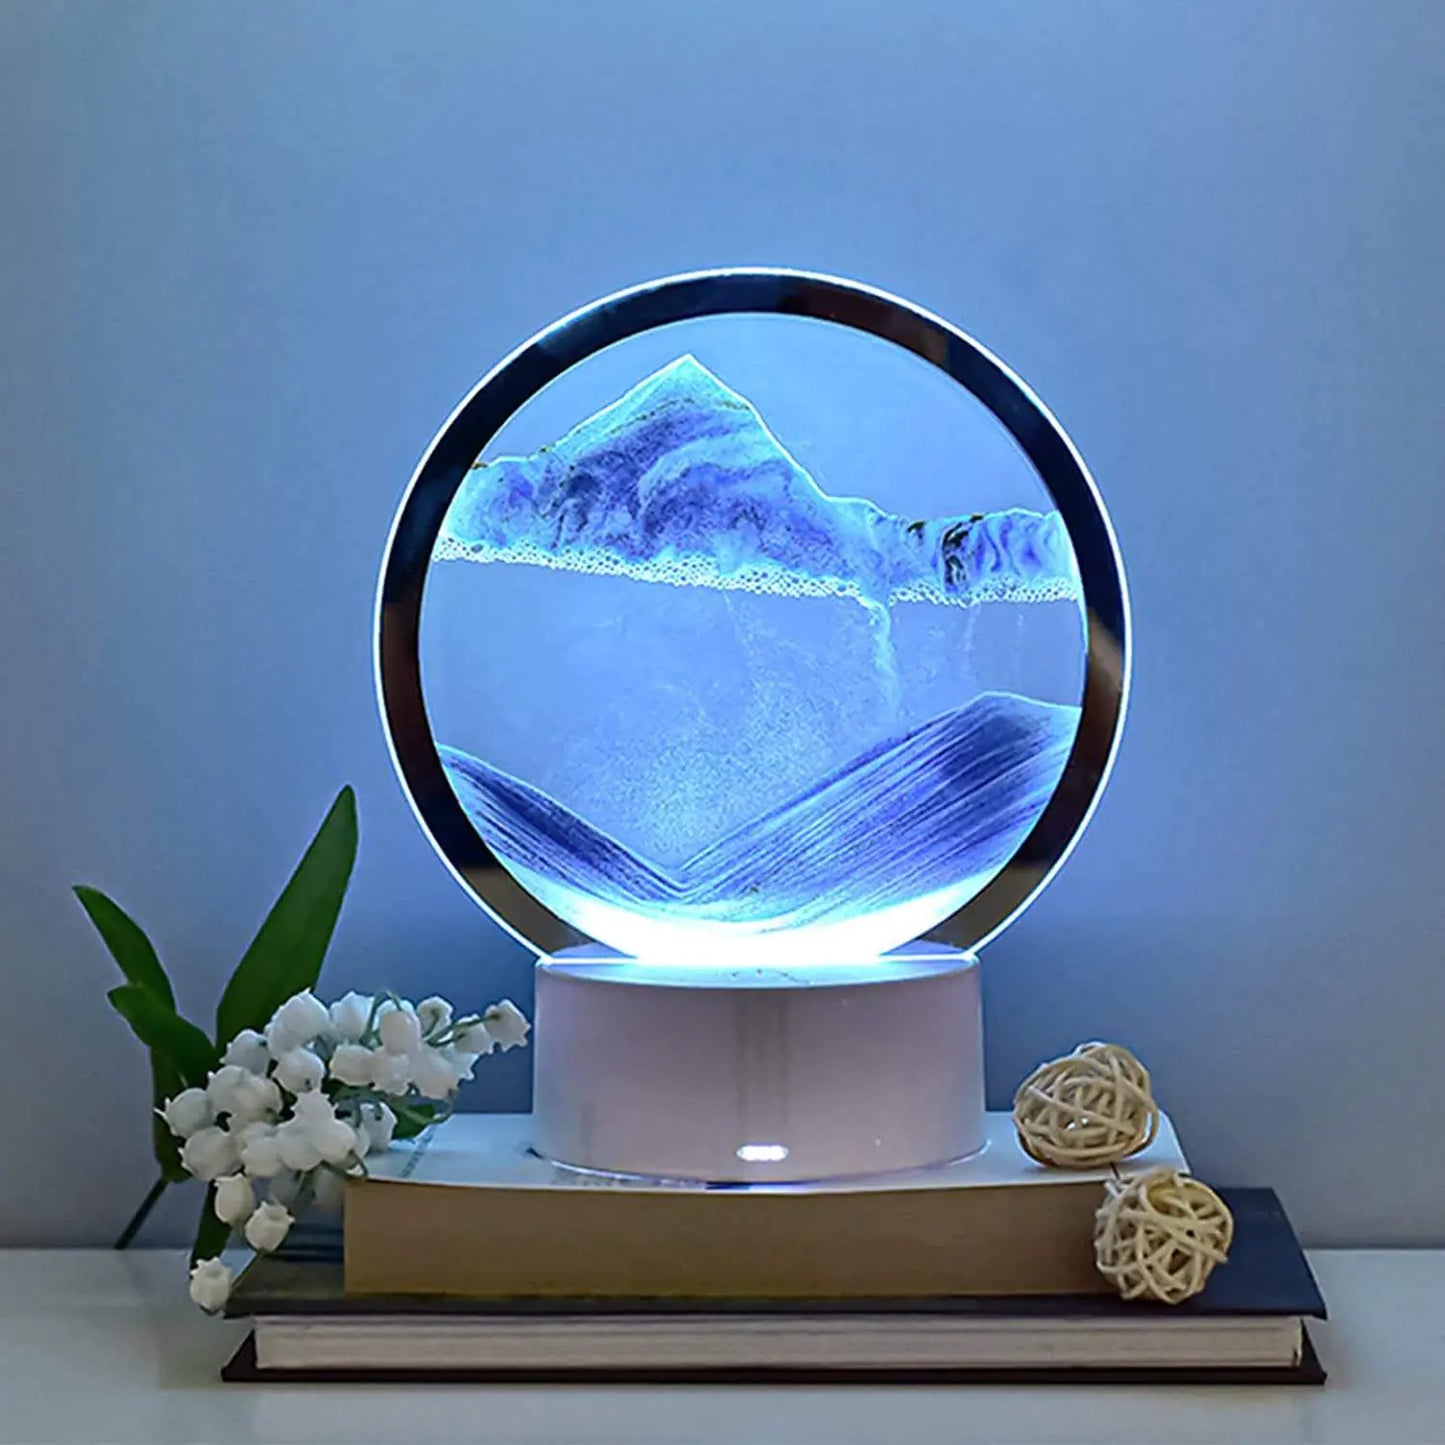 The LunaZen 3D Serenity Lamp